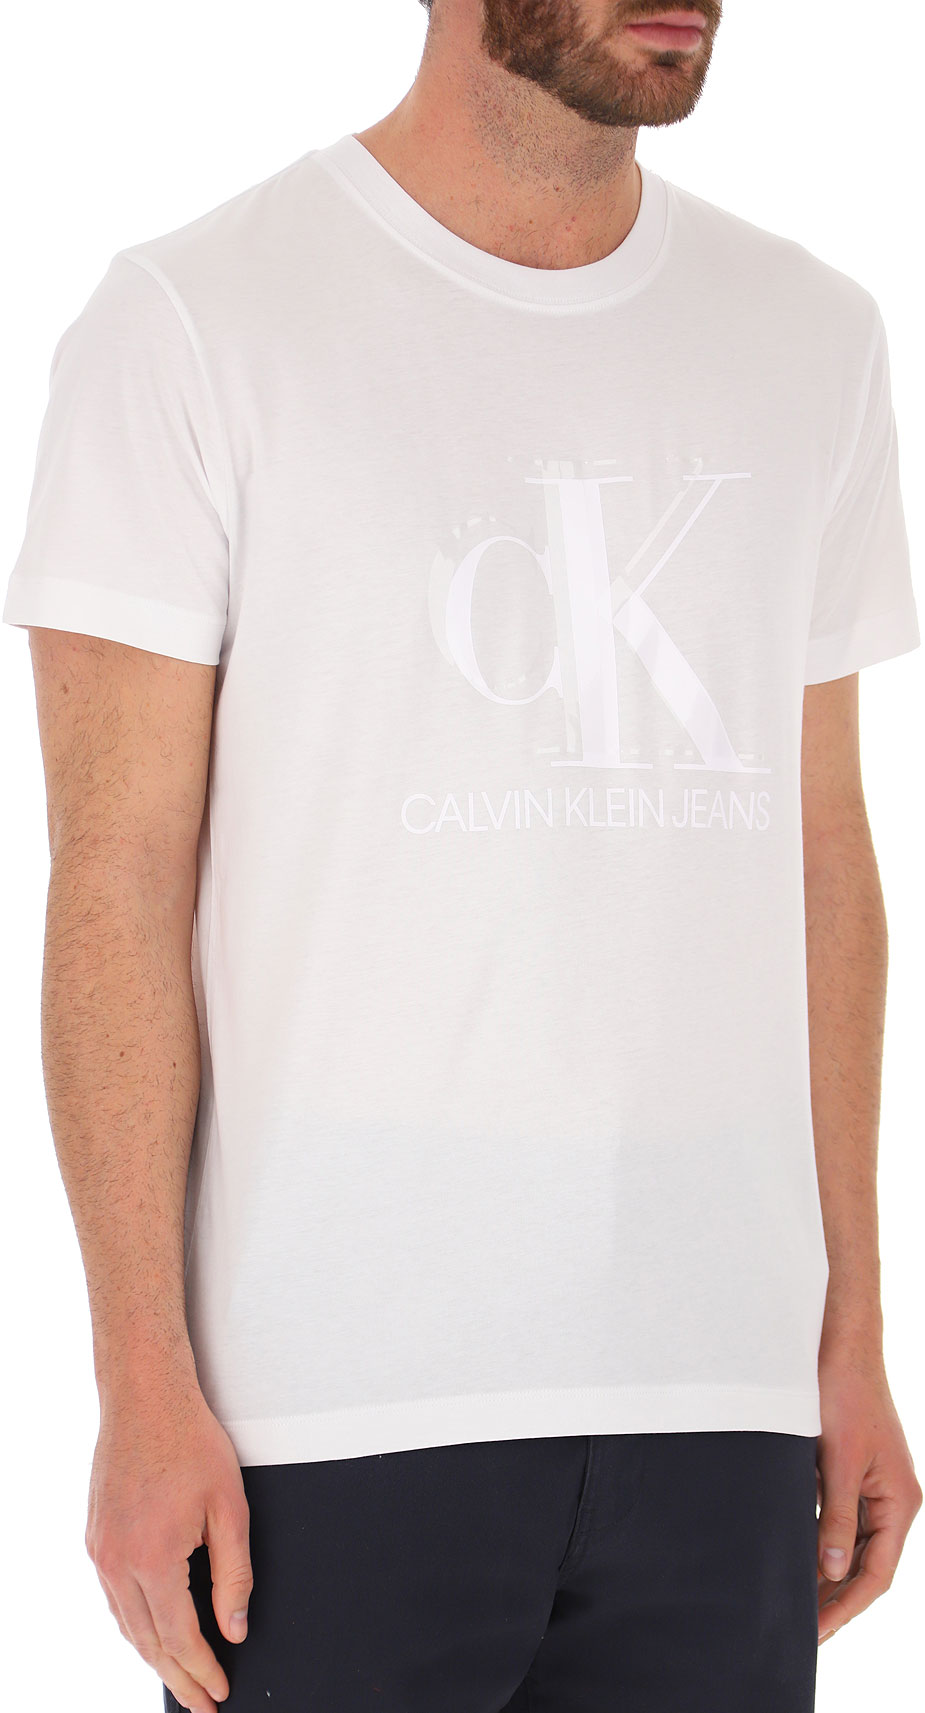 Mens Clothing Calvin Klein, Style code: j30j317508-yaf-